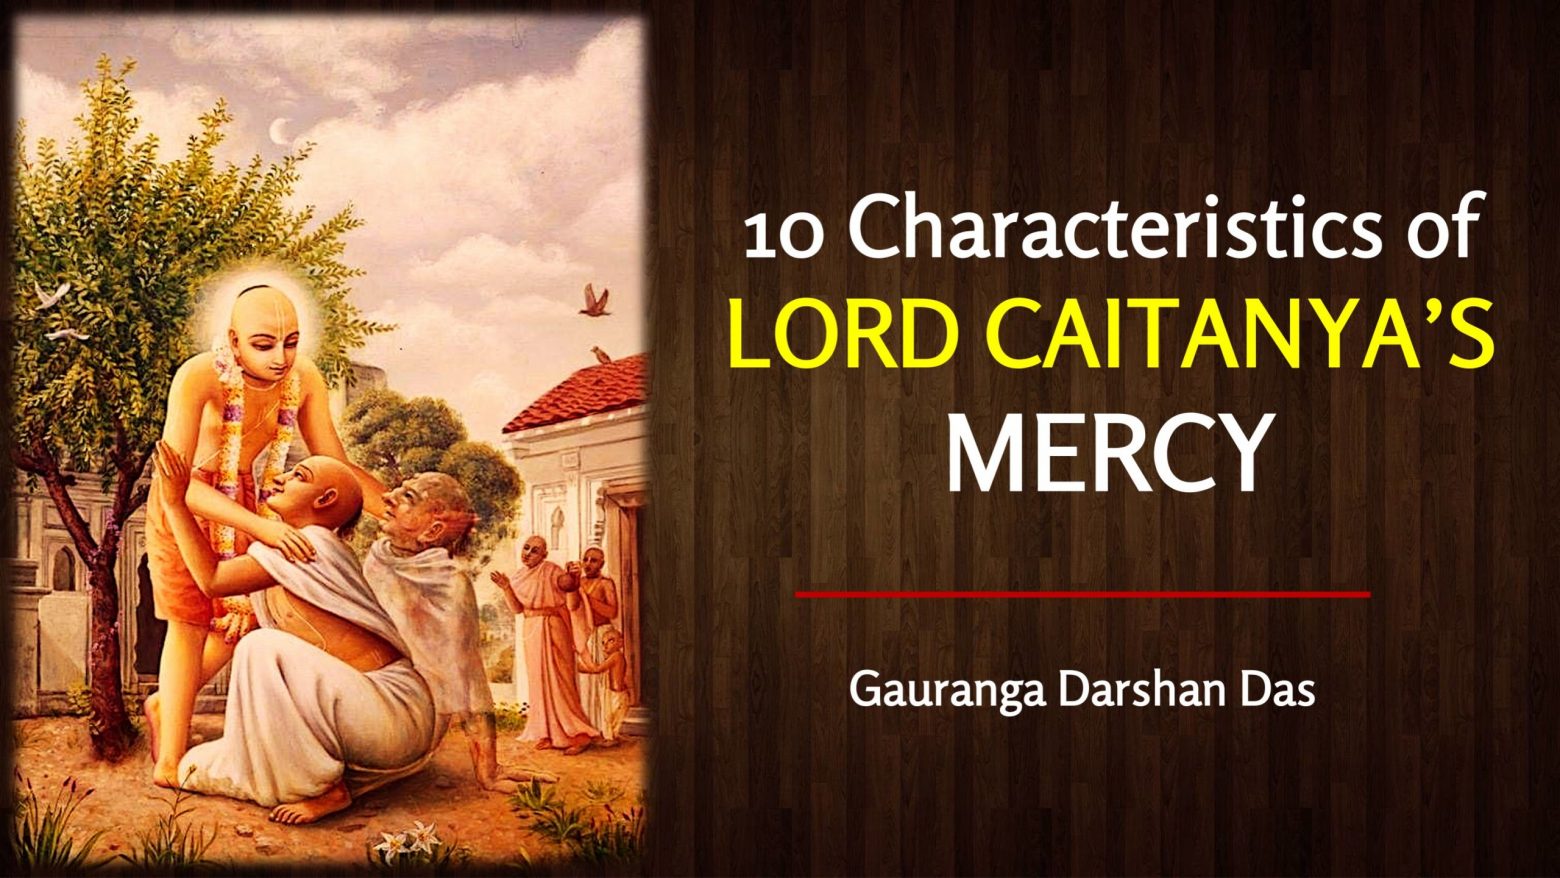 Ten Characteristics of Lord Caitanya’s Mercy